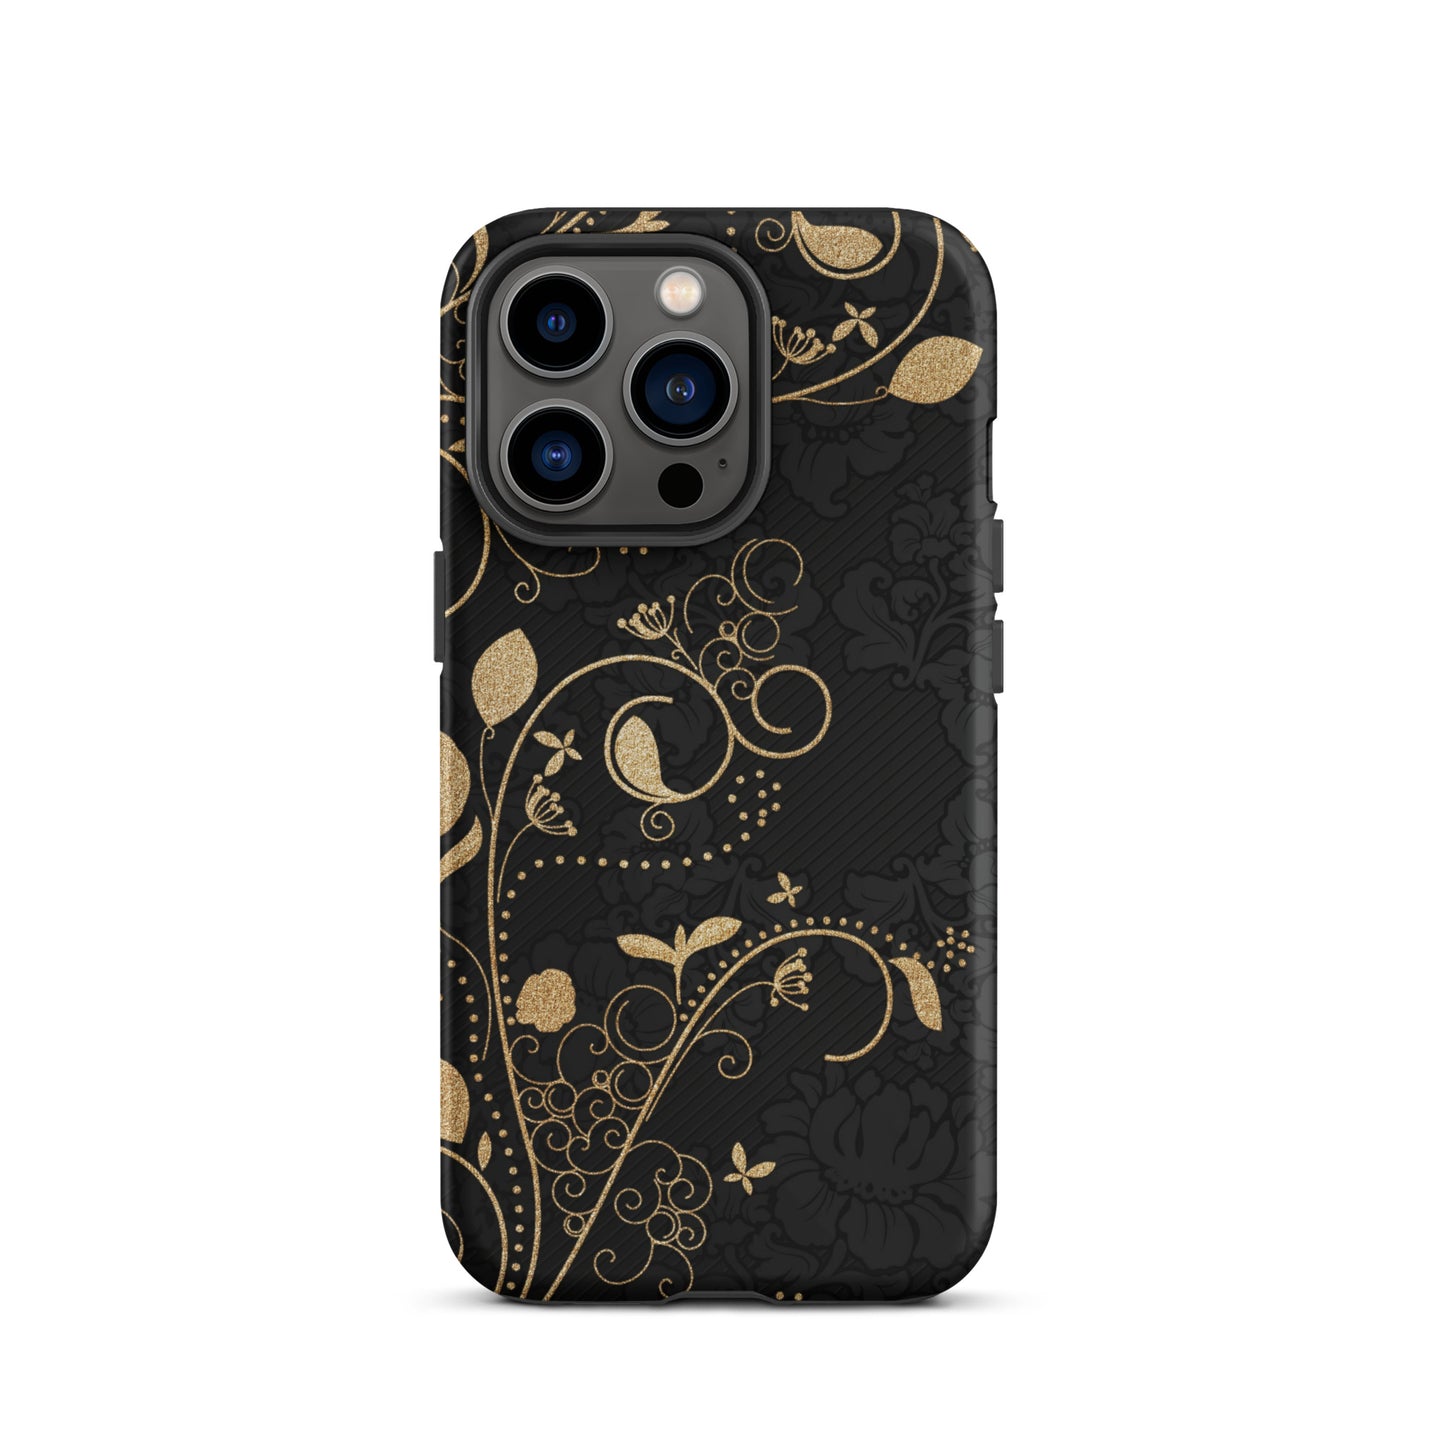 Black & Gold iPhone case